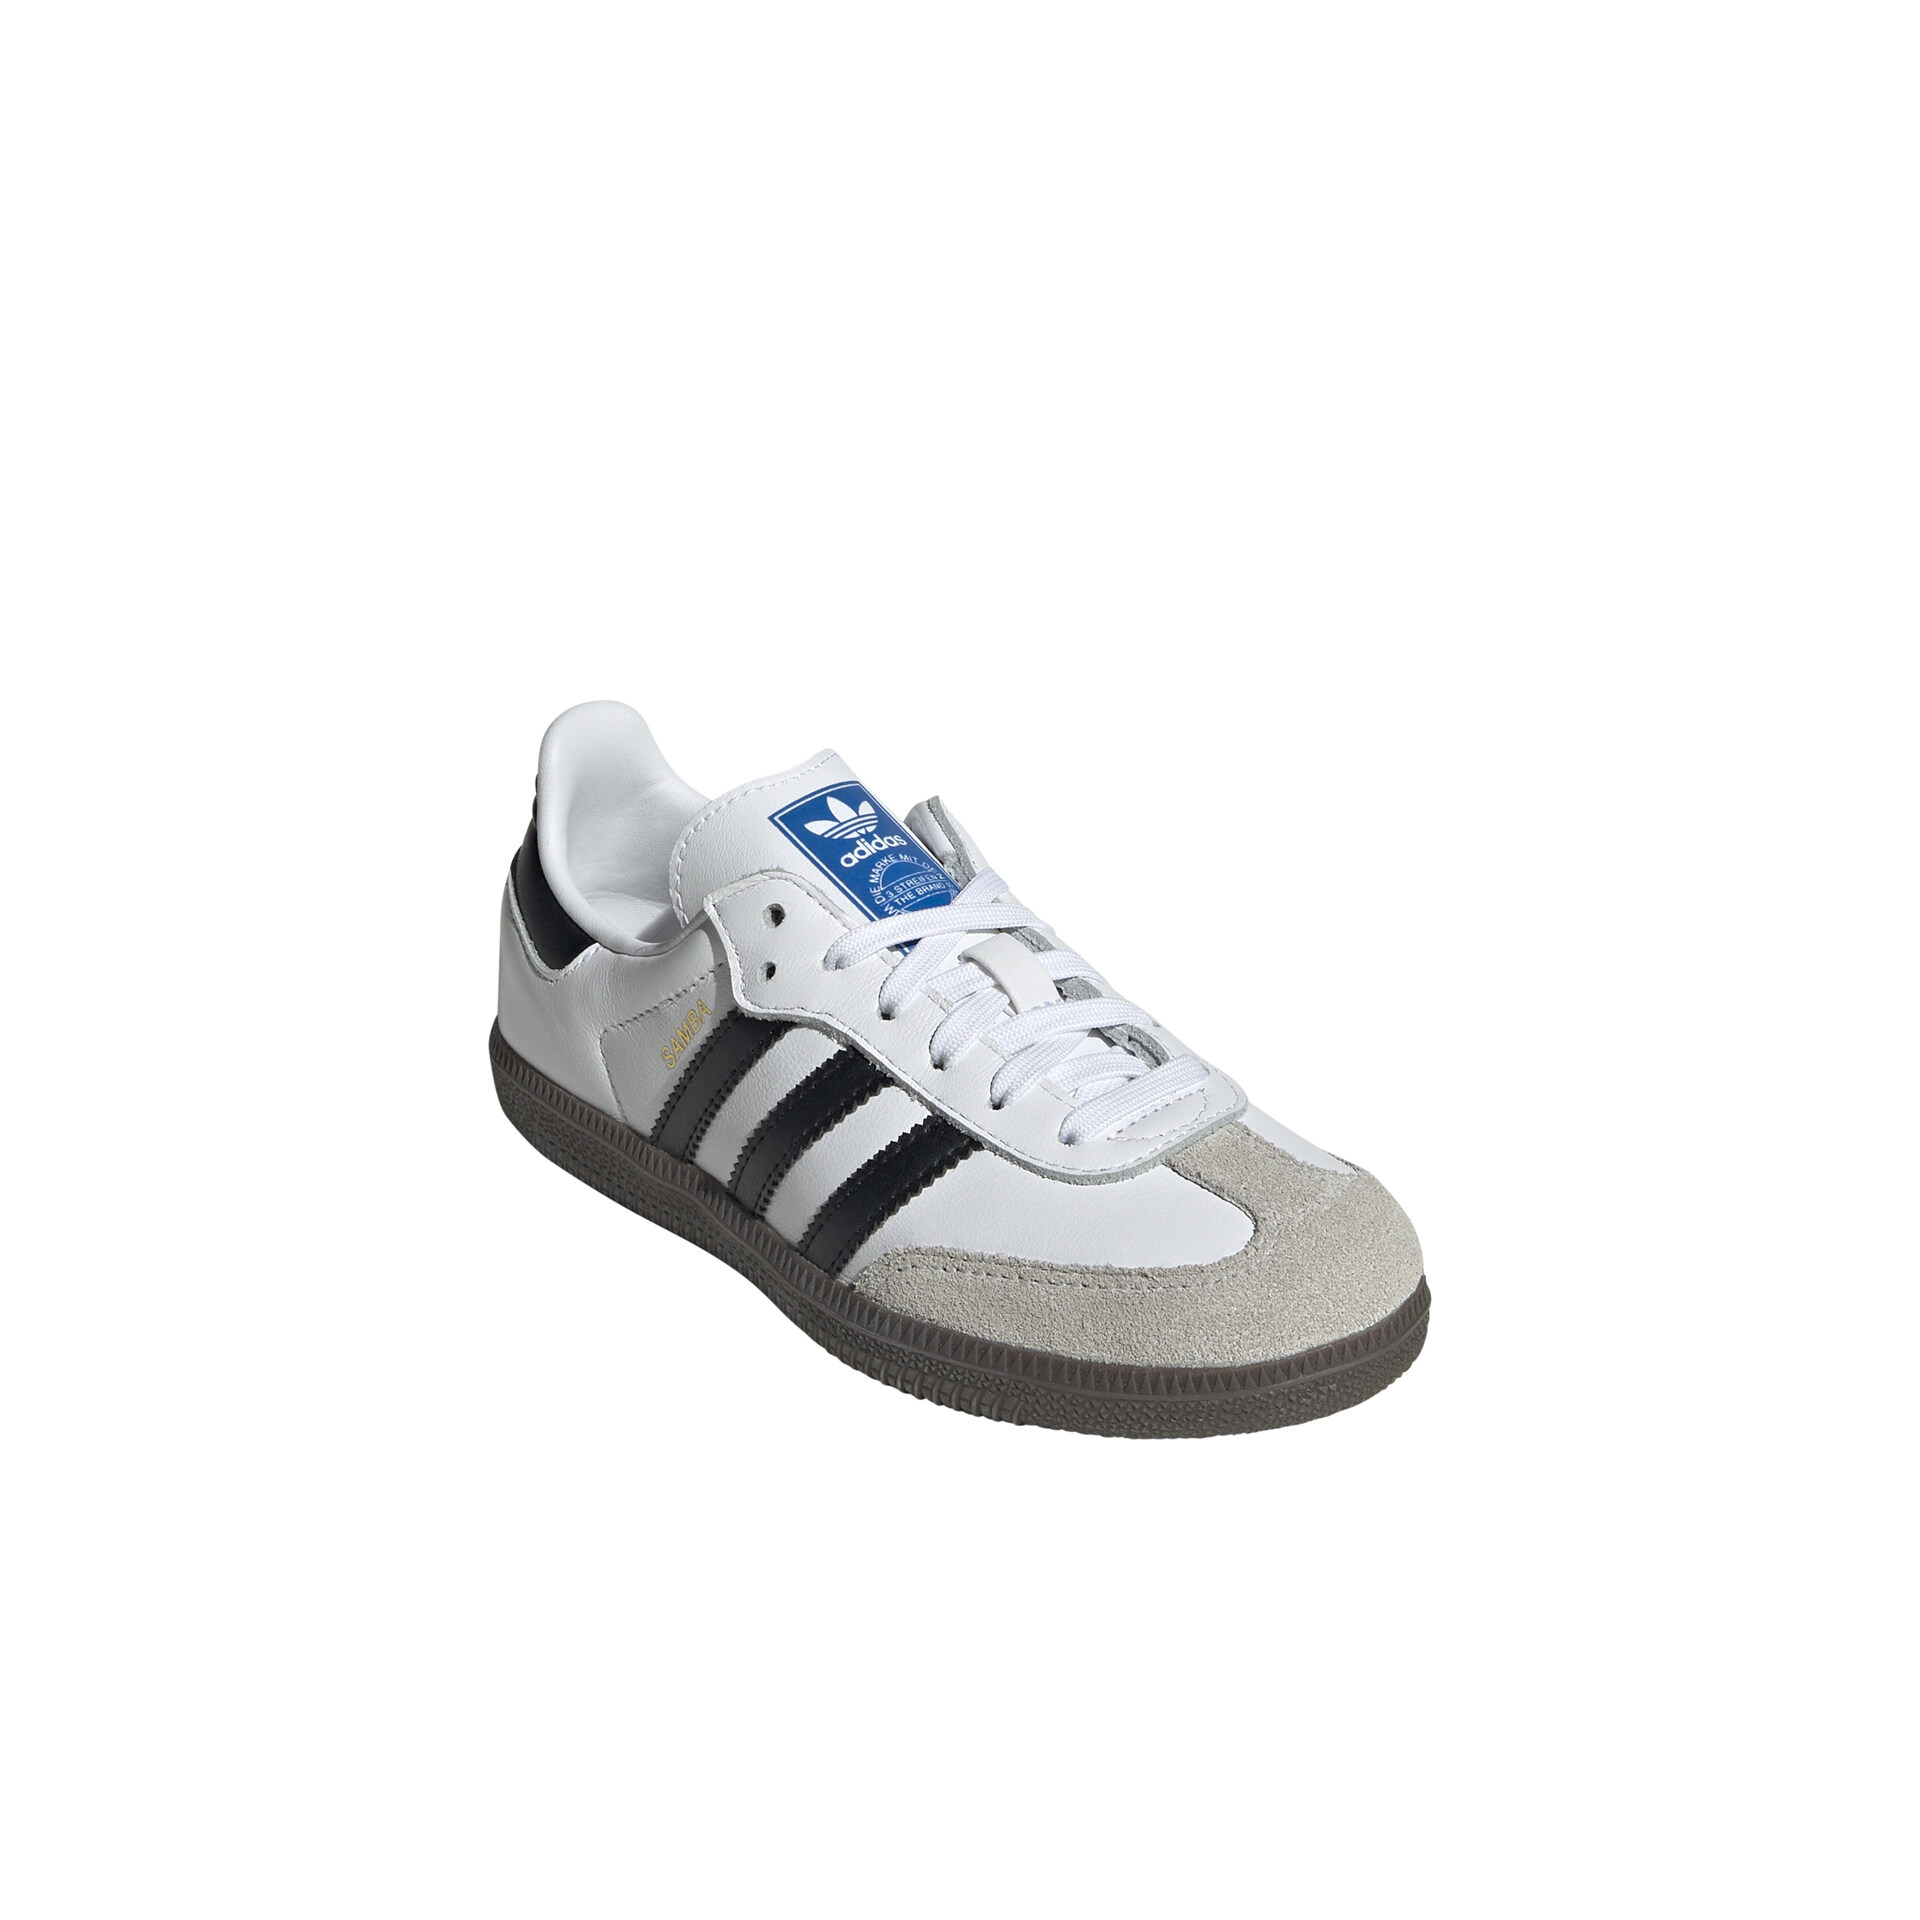 adidas Samba Og C blanco zapatillas niños/as tallas 28-38.5